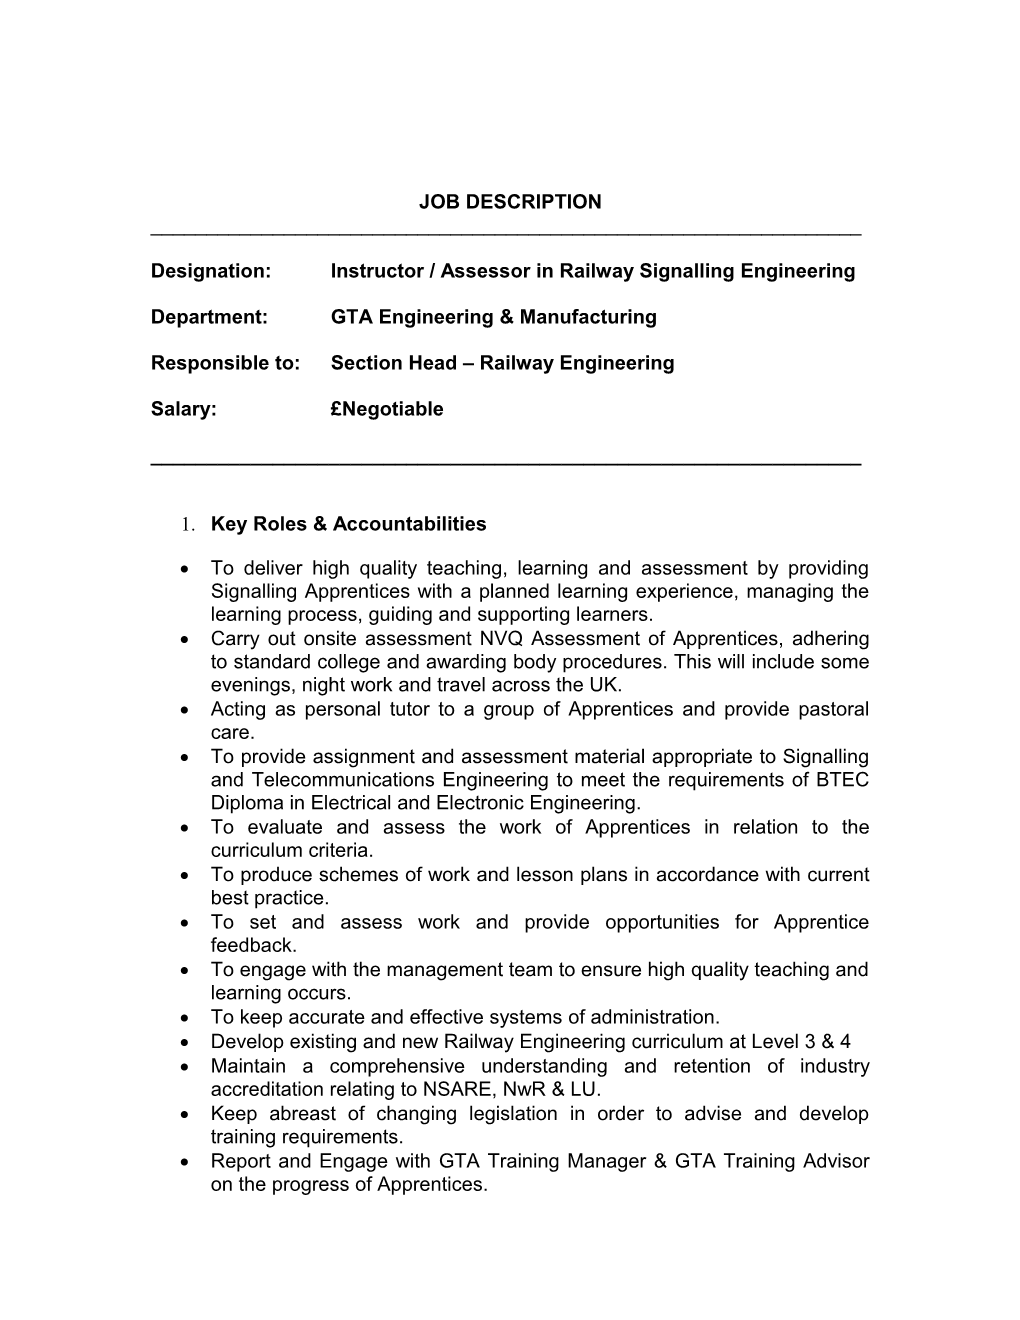 Designation:Instructor / Assessor in Railway Signalling Engineering